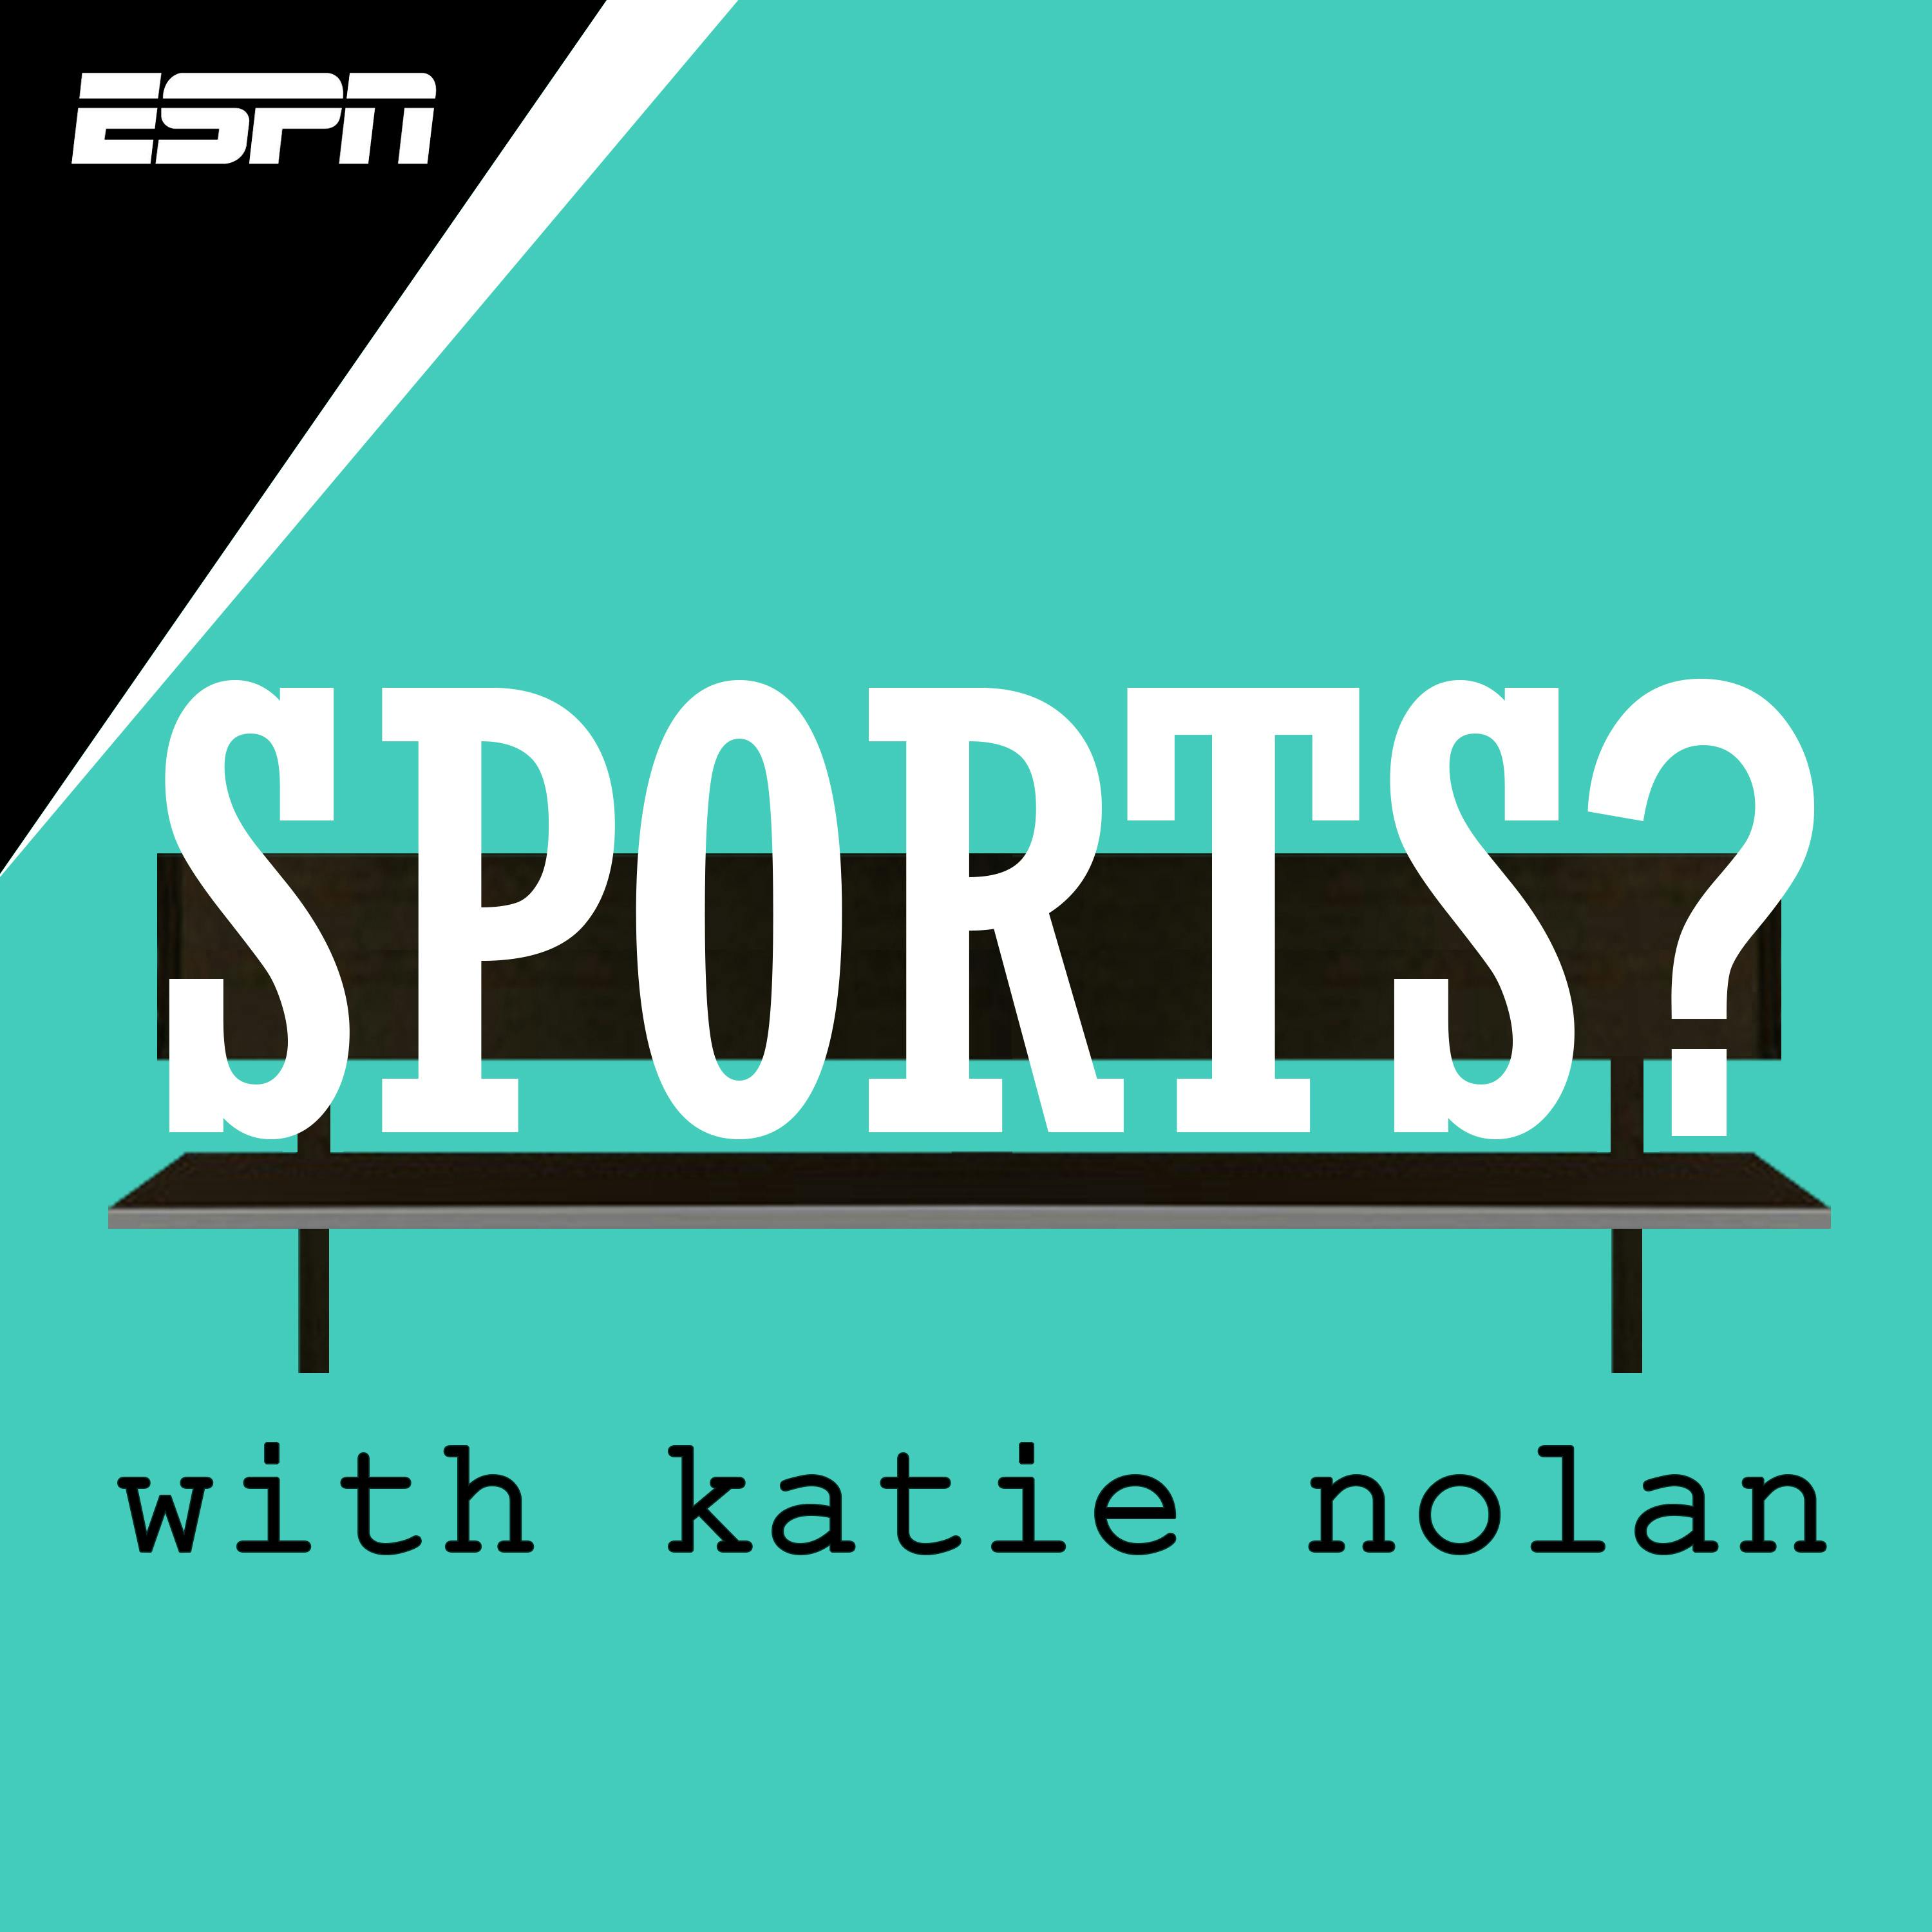 Sports? with Katie Nolan